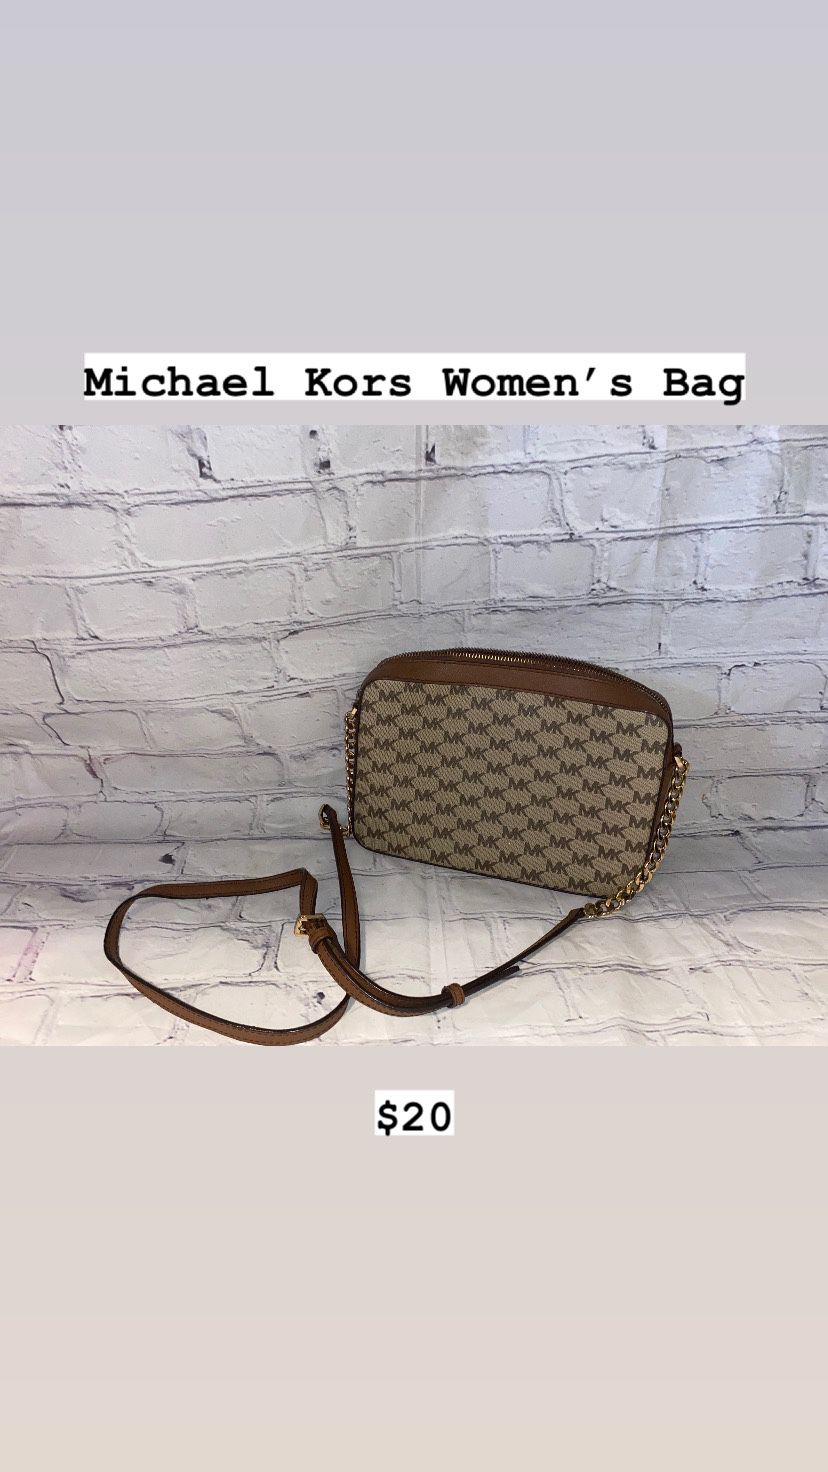 Michael Kors Women’s Purse/Bag - $20